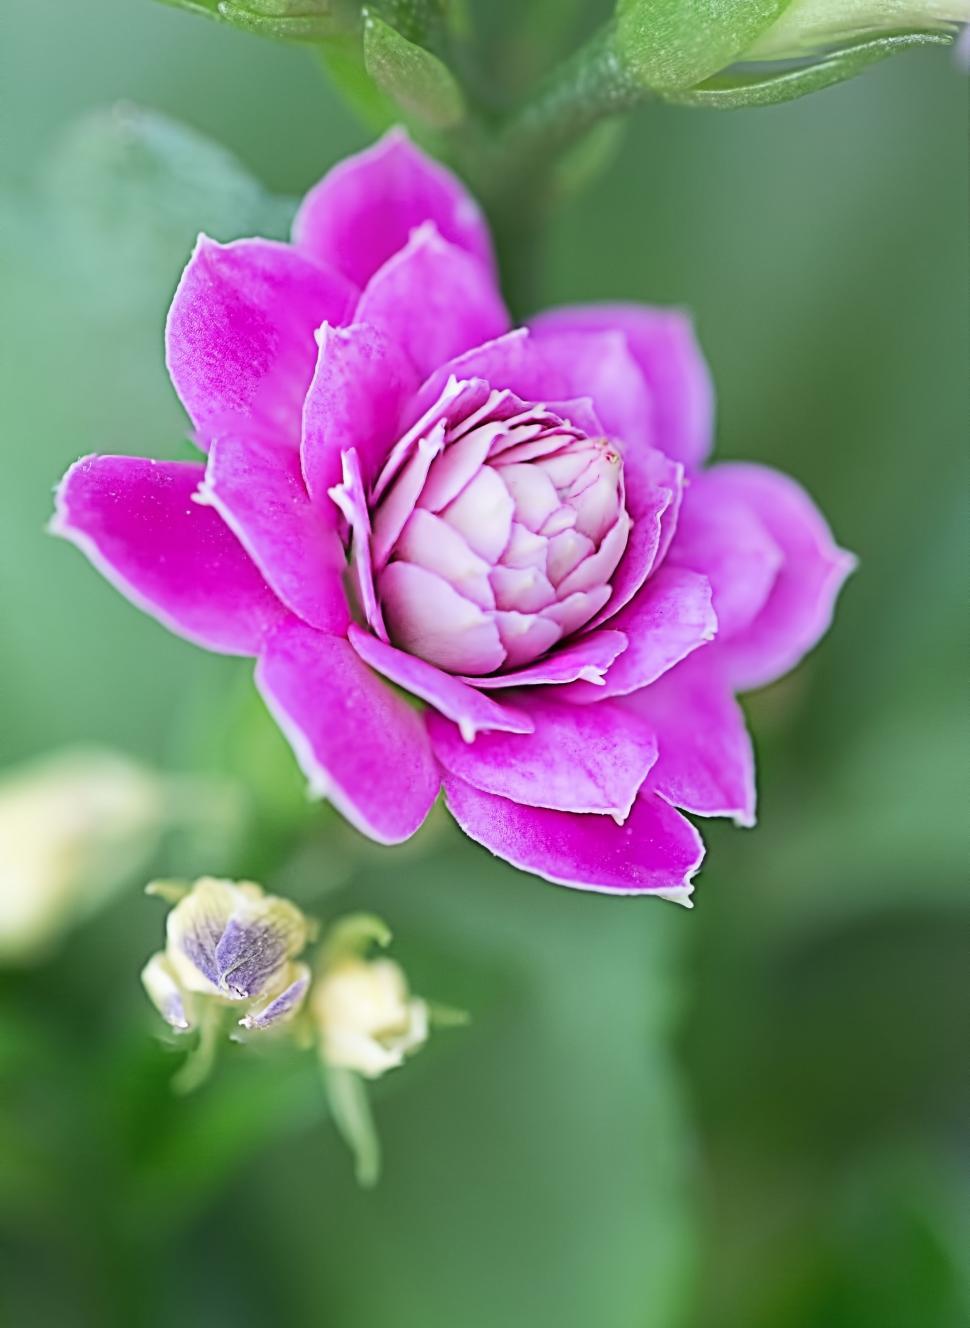 Free Image of Pink Flower 